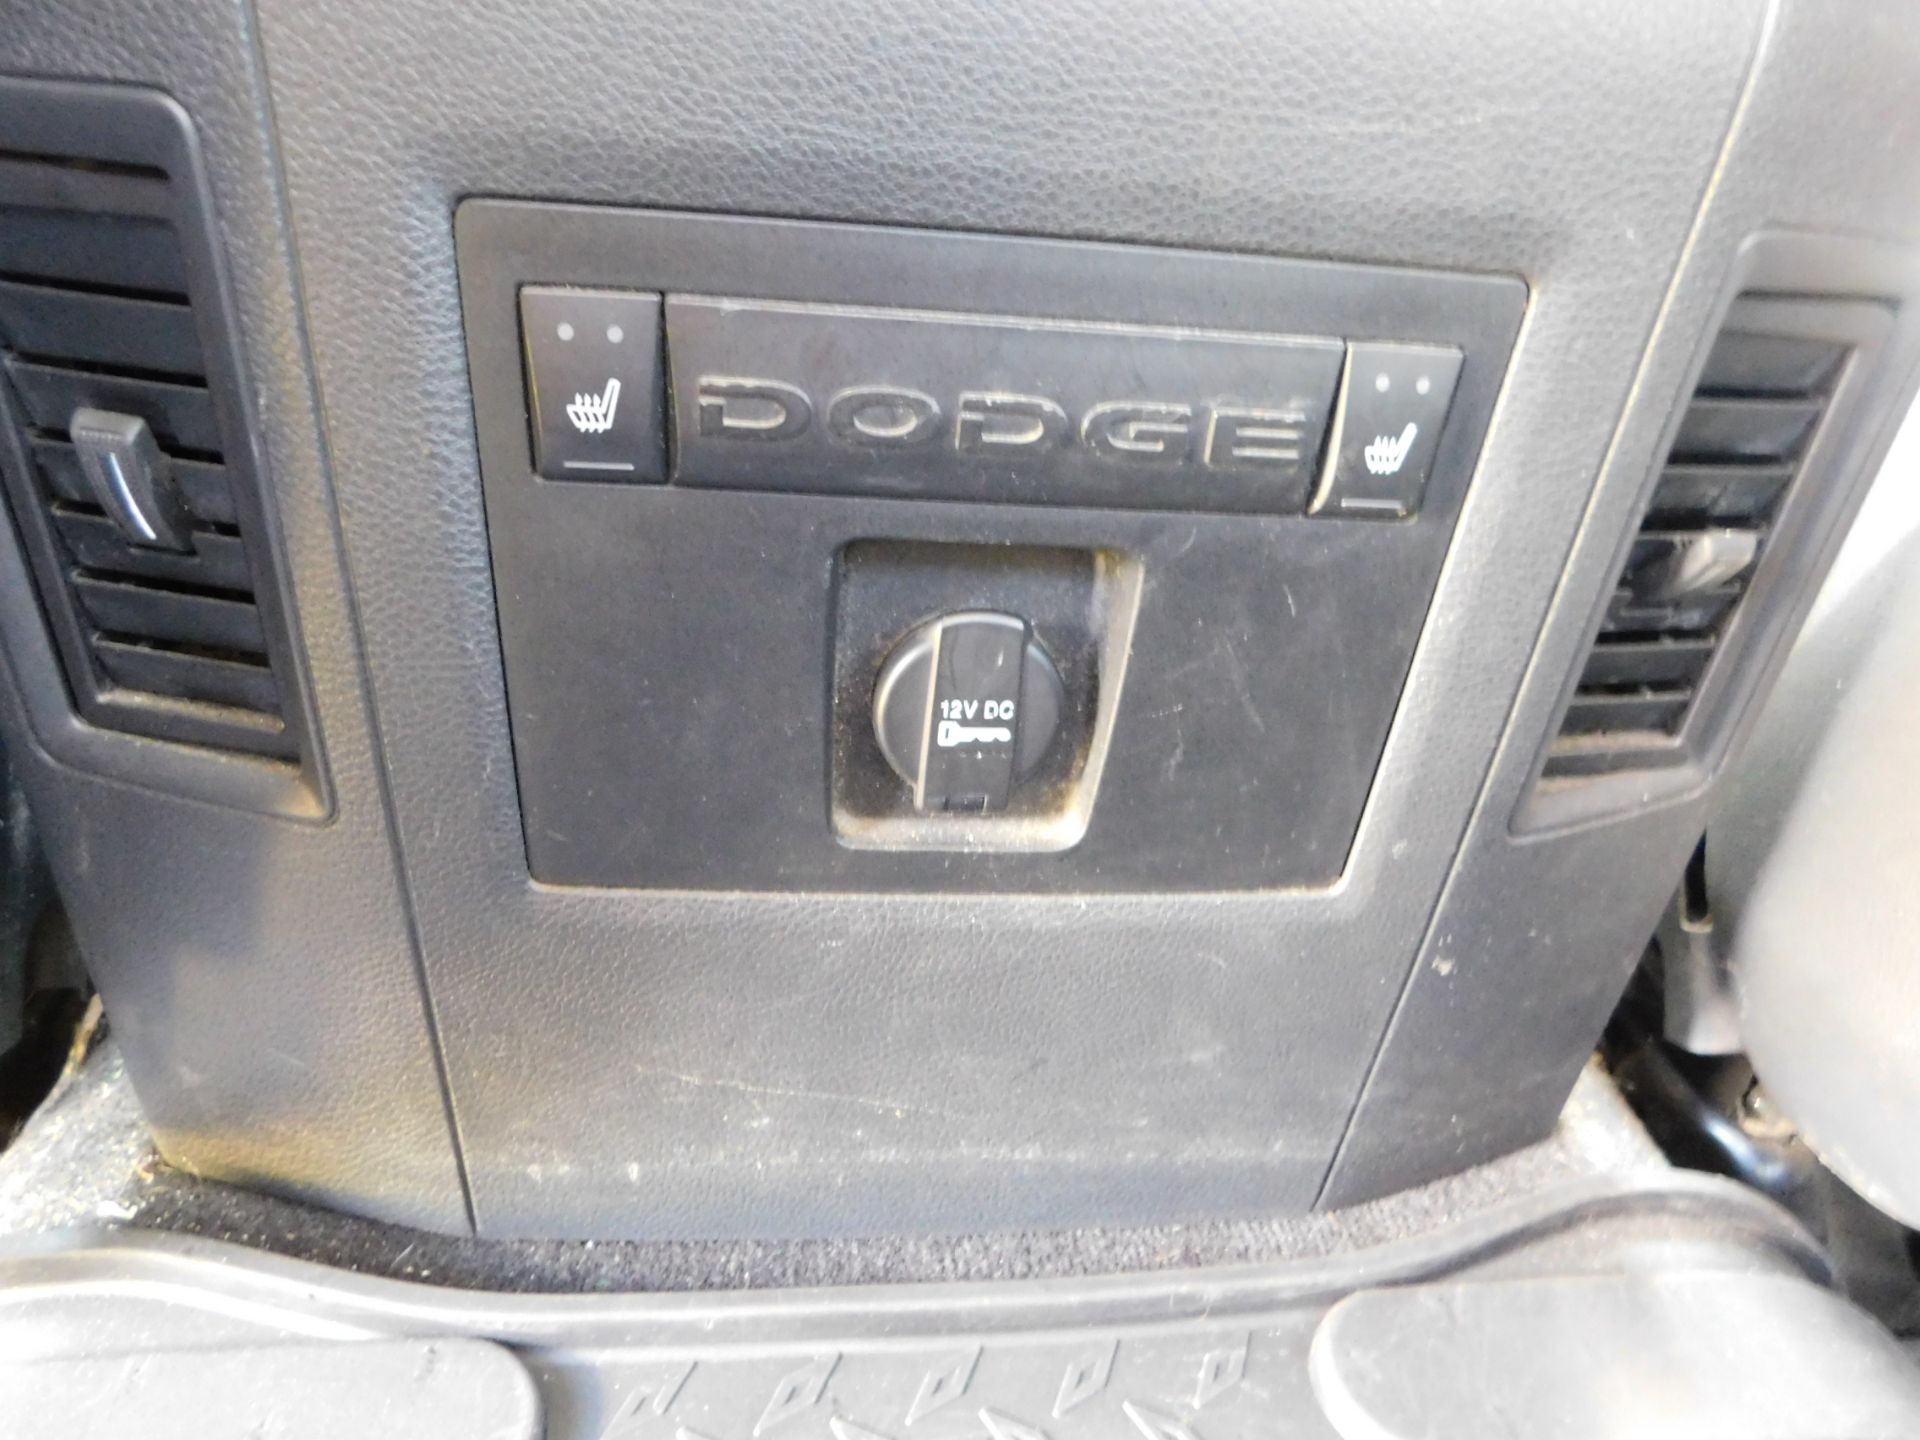 2012 Dodge Ram 1500 Pickup, Crew Cab, 6' Bed, Automatic, 4 WD, AM/FM,AC, PL, PW, Hemi 5.7 L - Image 39 of 53